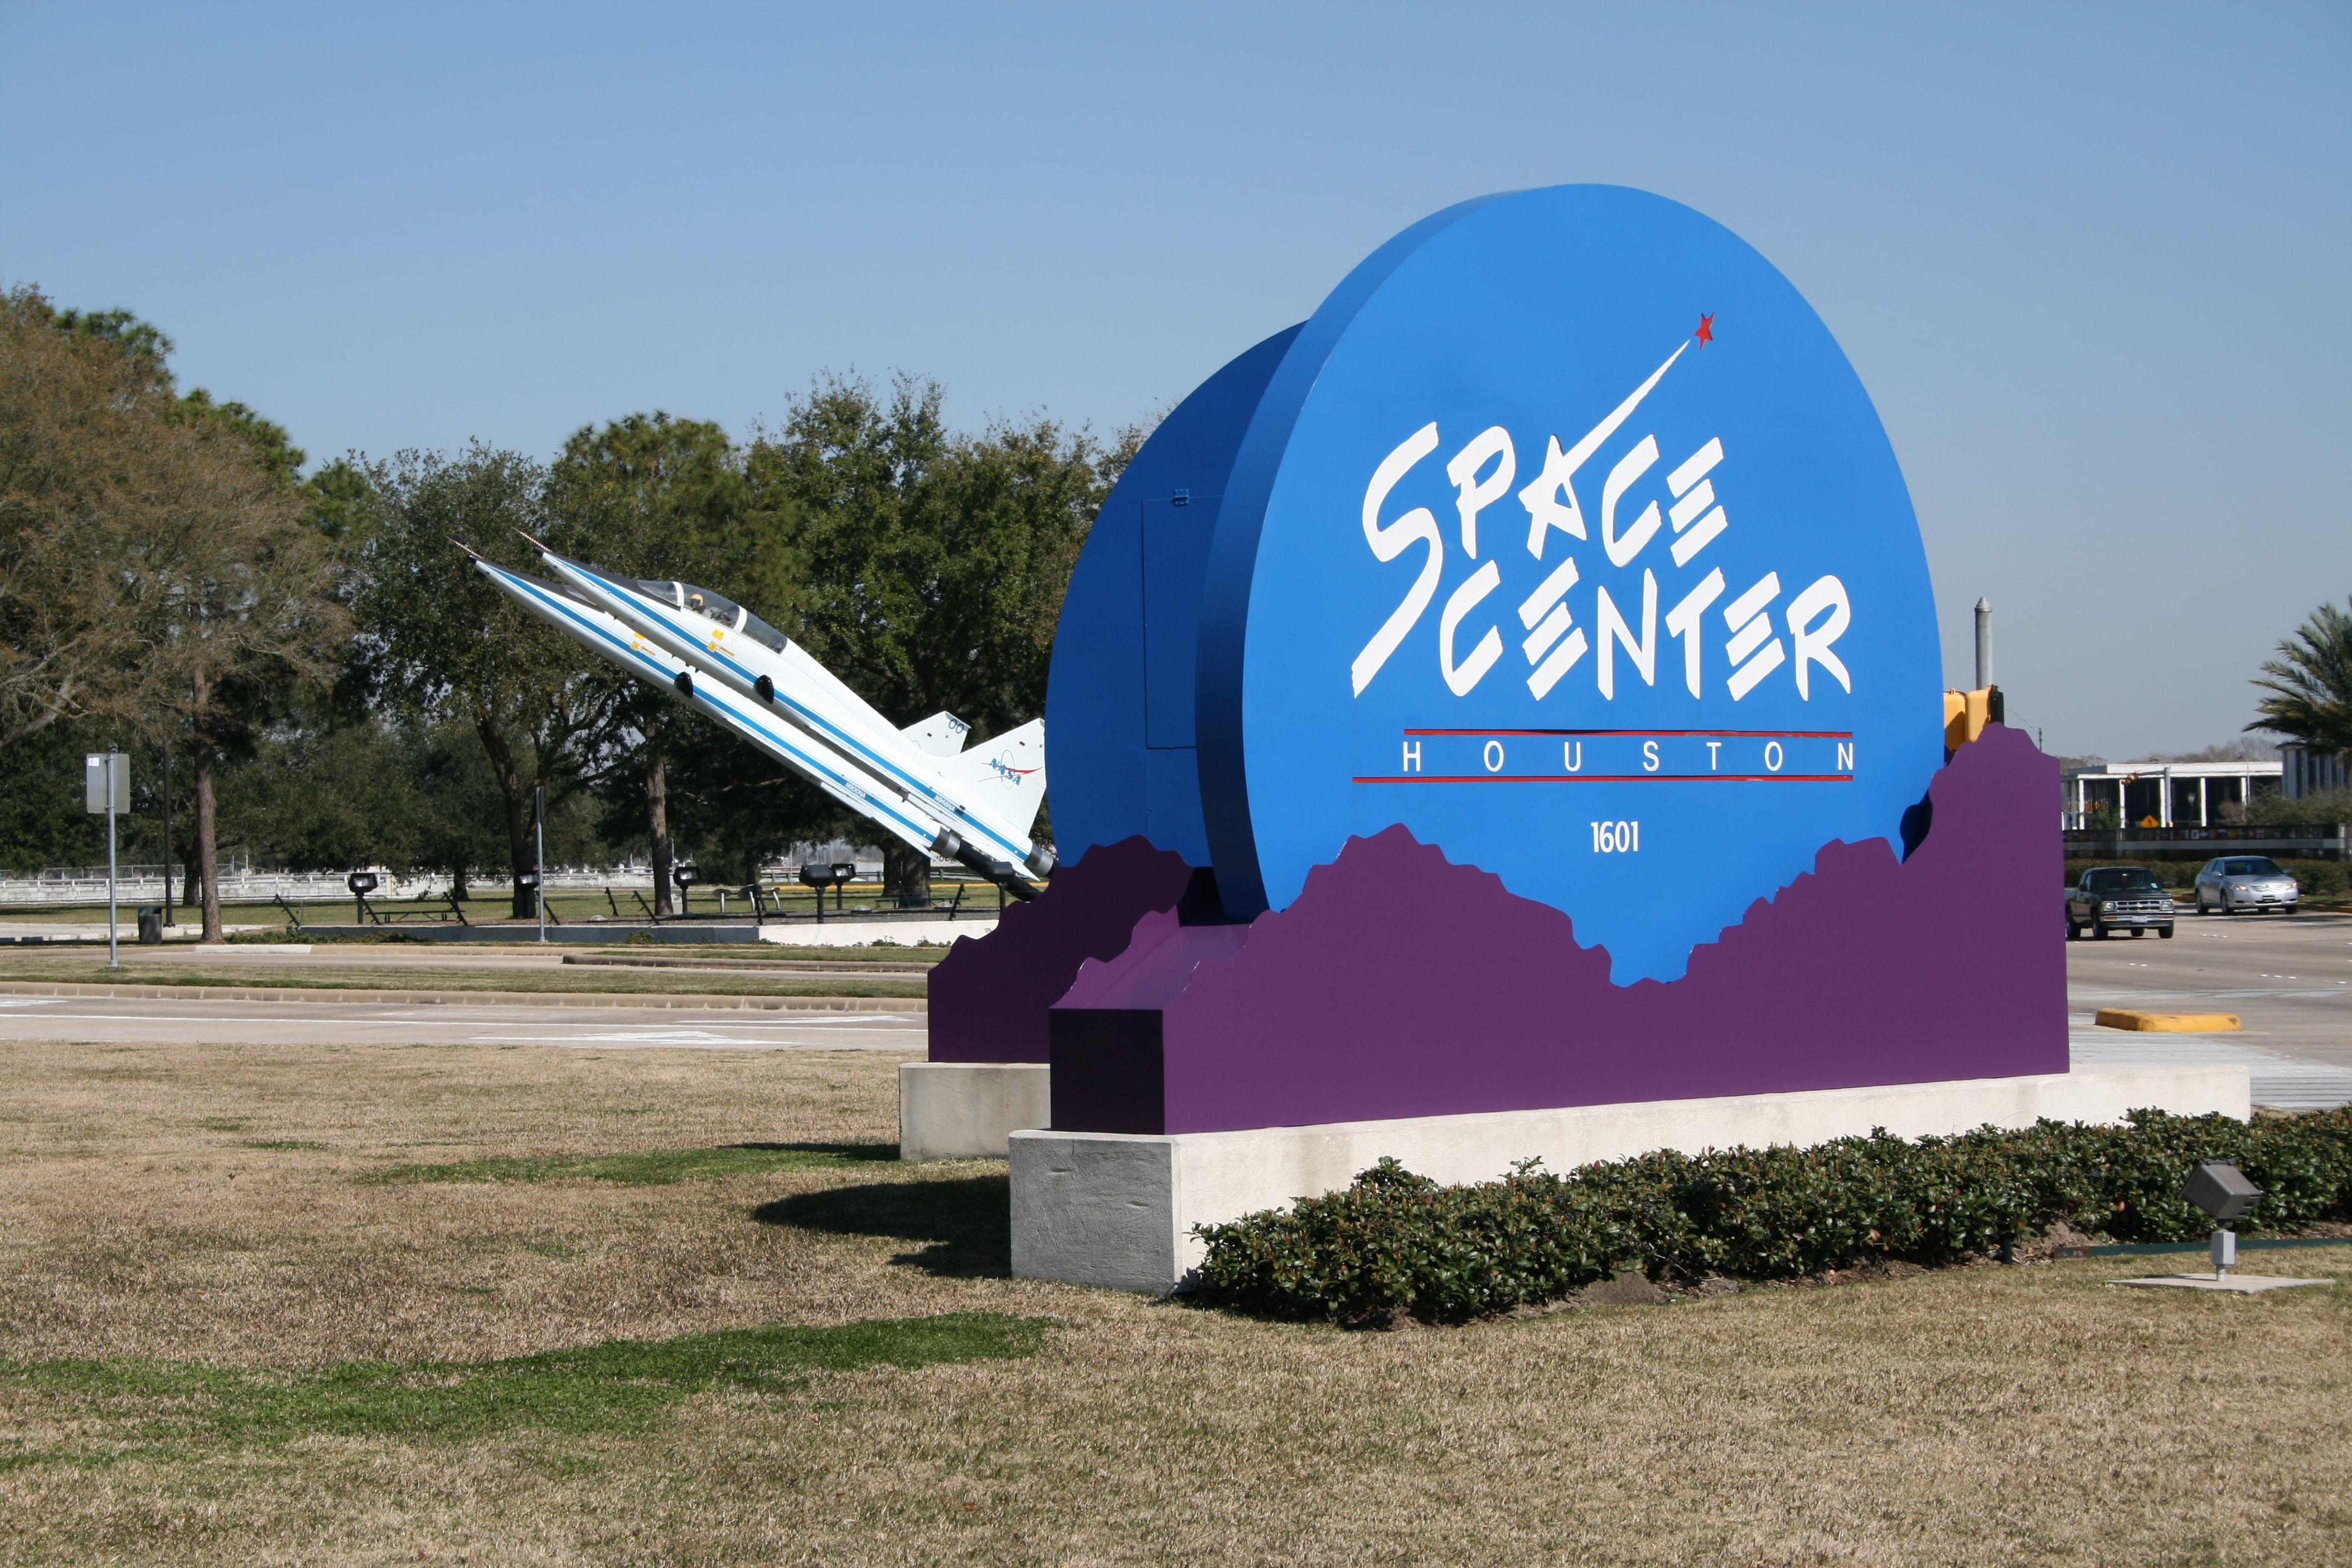 NASA Space Center Houston Logo - News Release